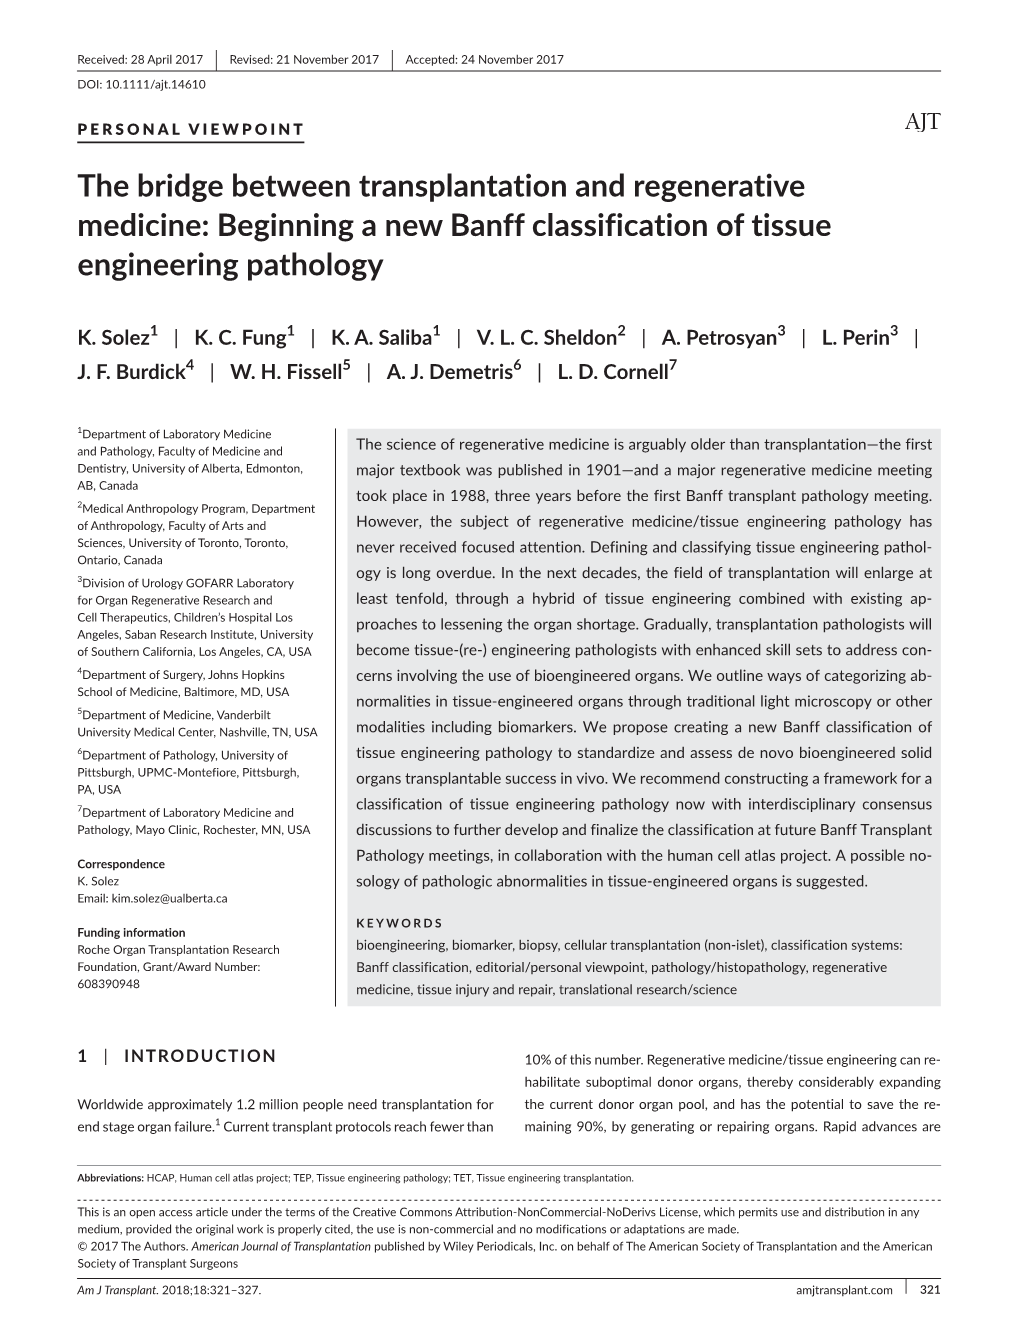 The Bridge Between Transplantation and Regenerative Medicine: Beginning a New Banff Classification of Tissue Engineering Pathology